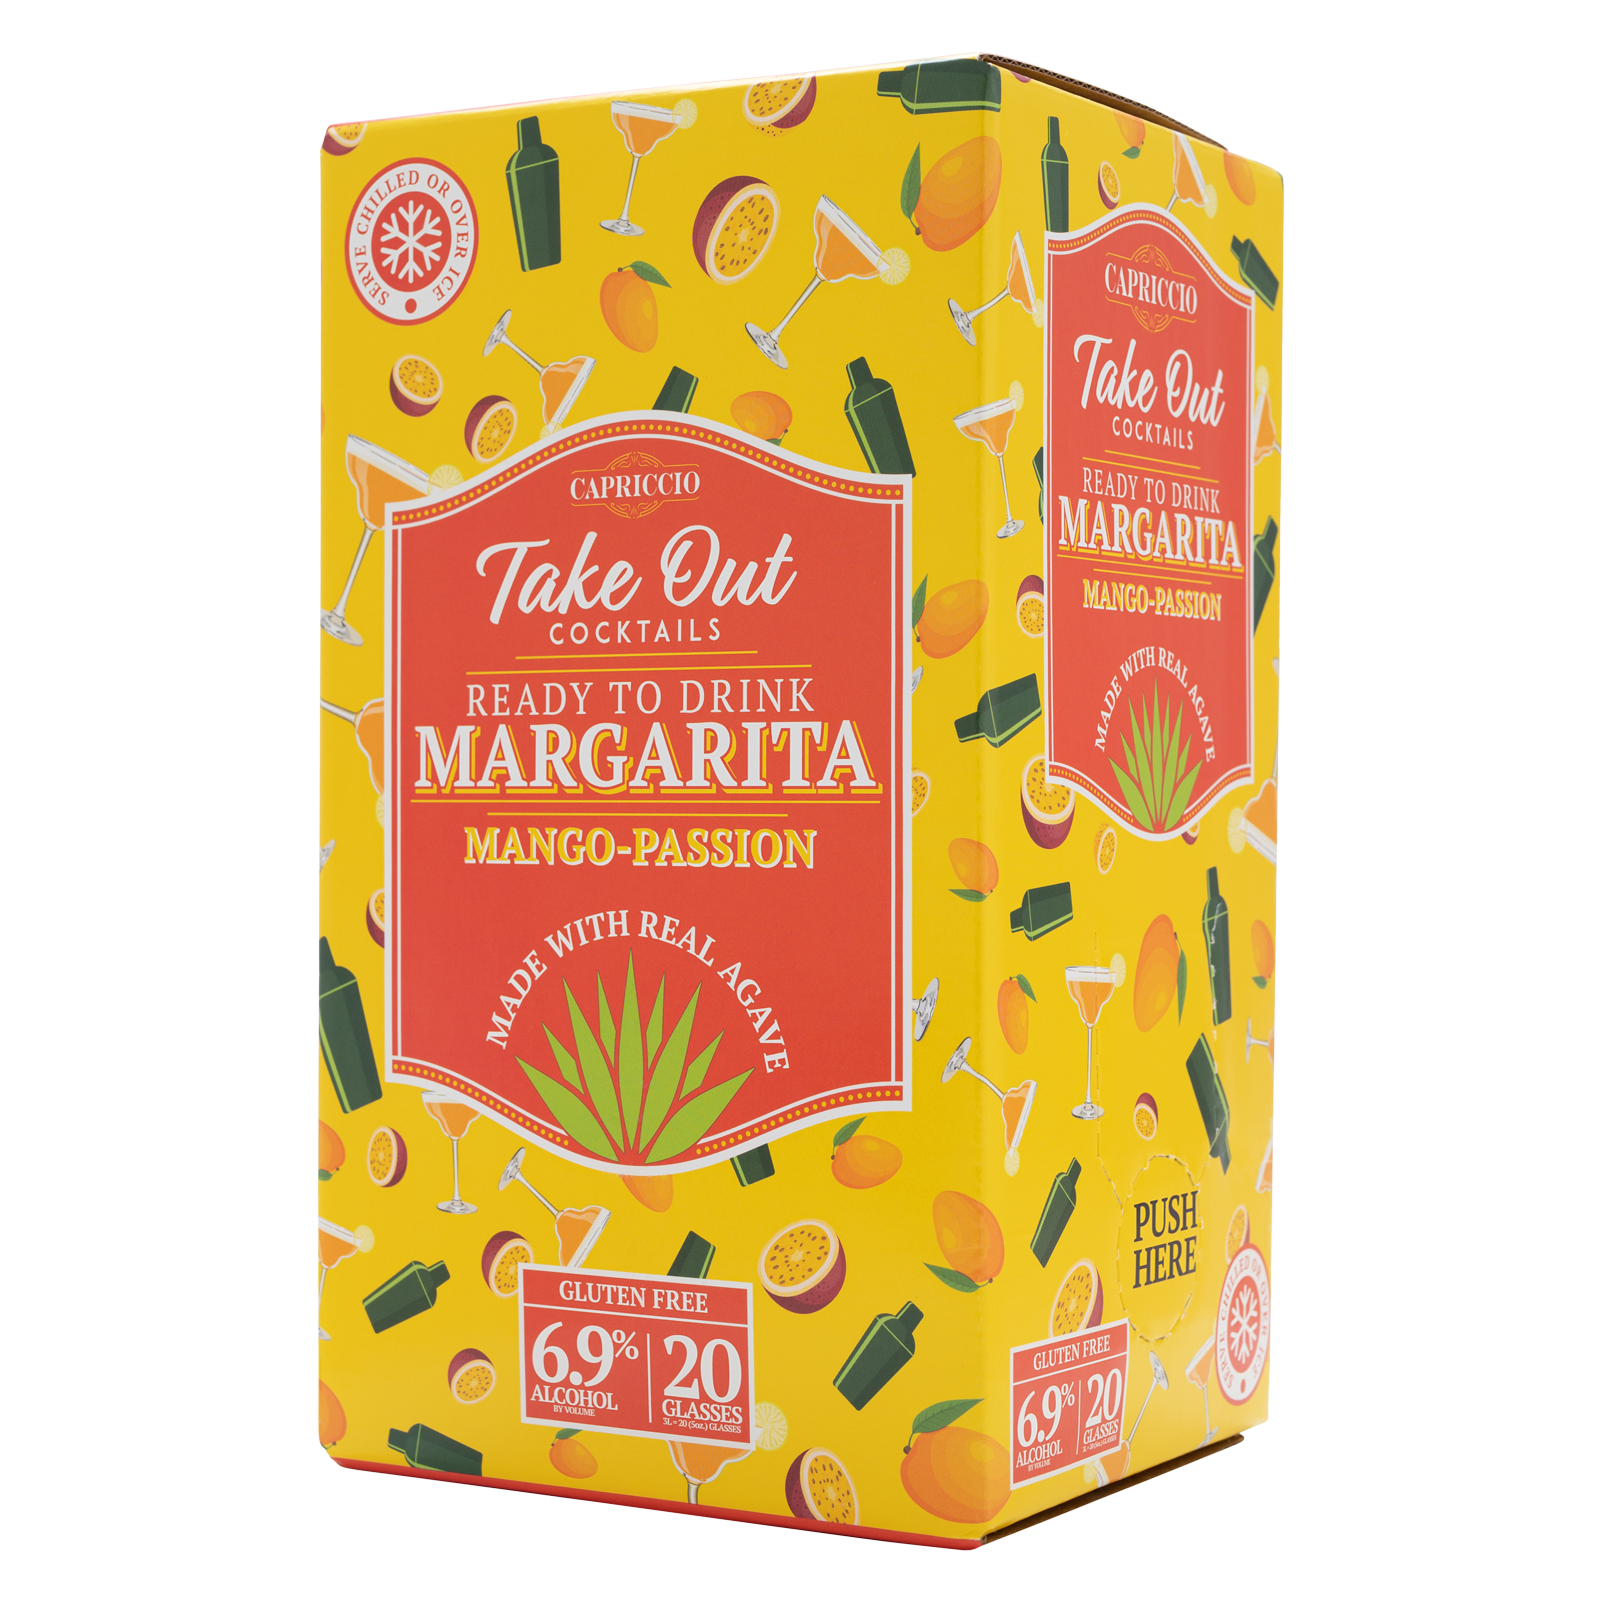 Capriccio Mango Passion Margarita 3L Box 6.9% ABV